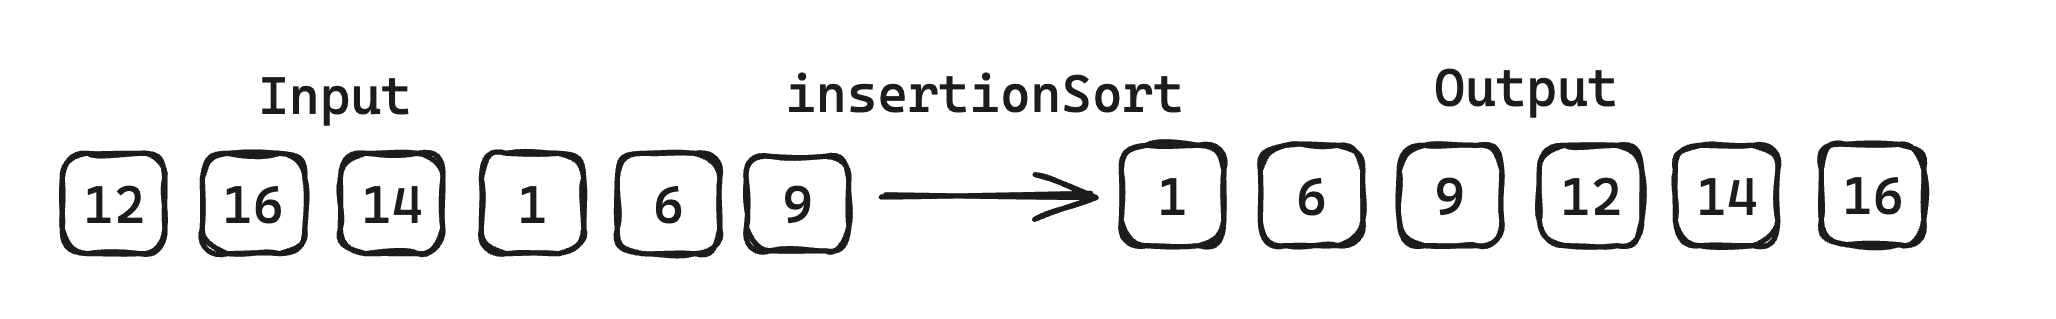 Insertion Sort Input Output